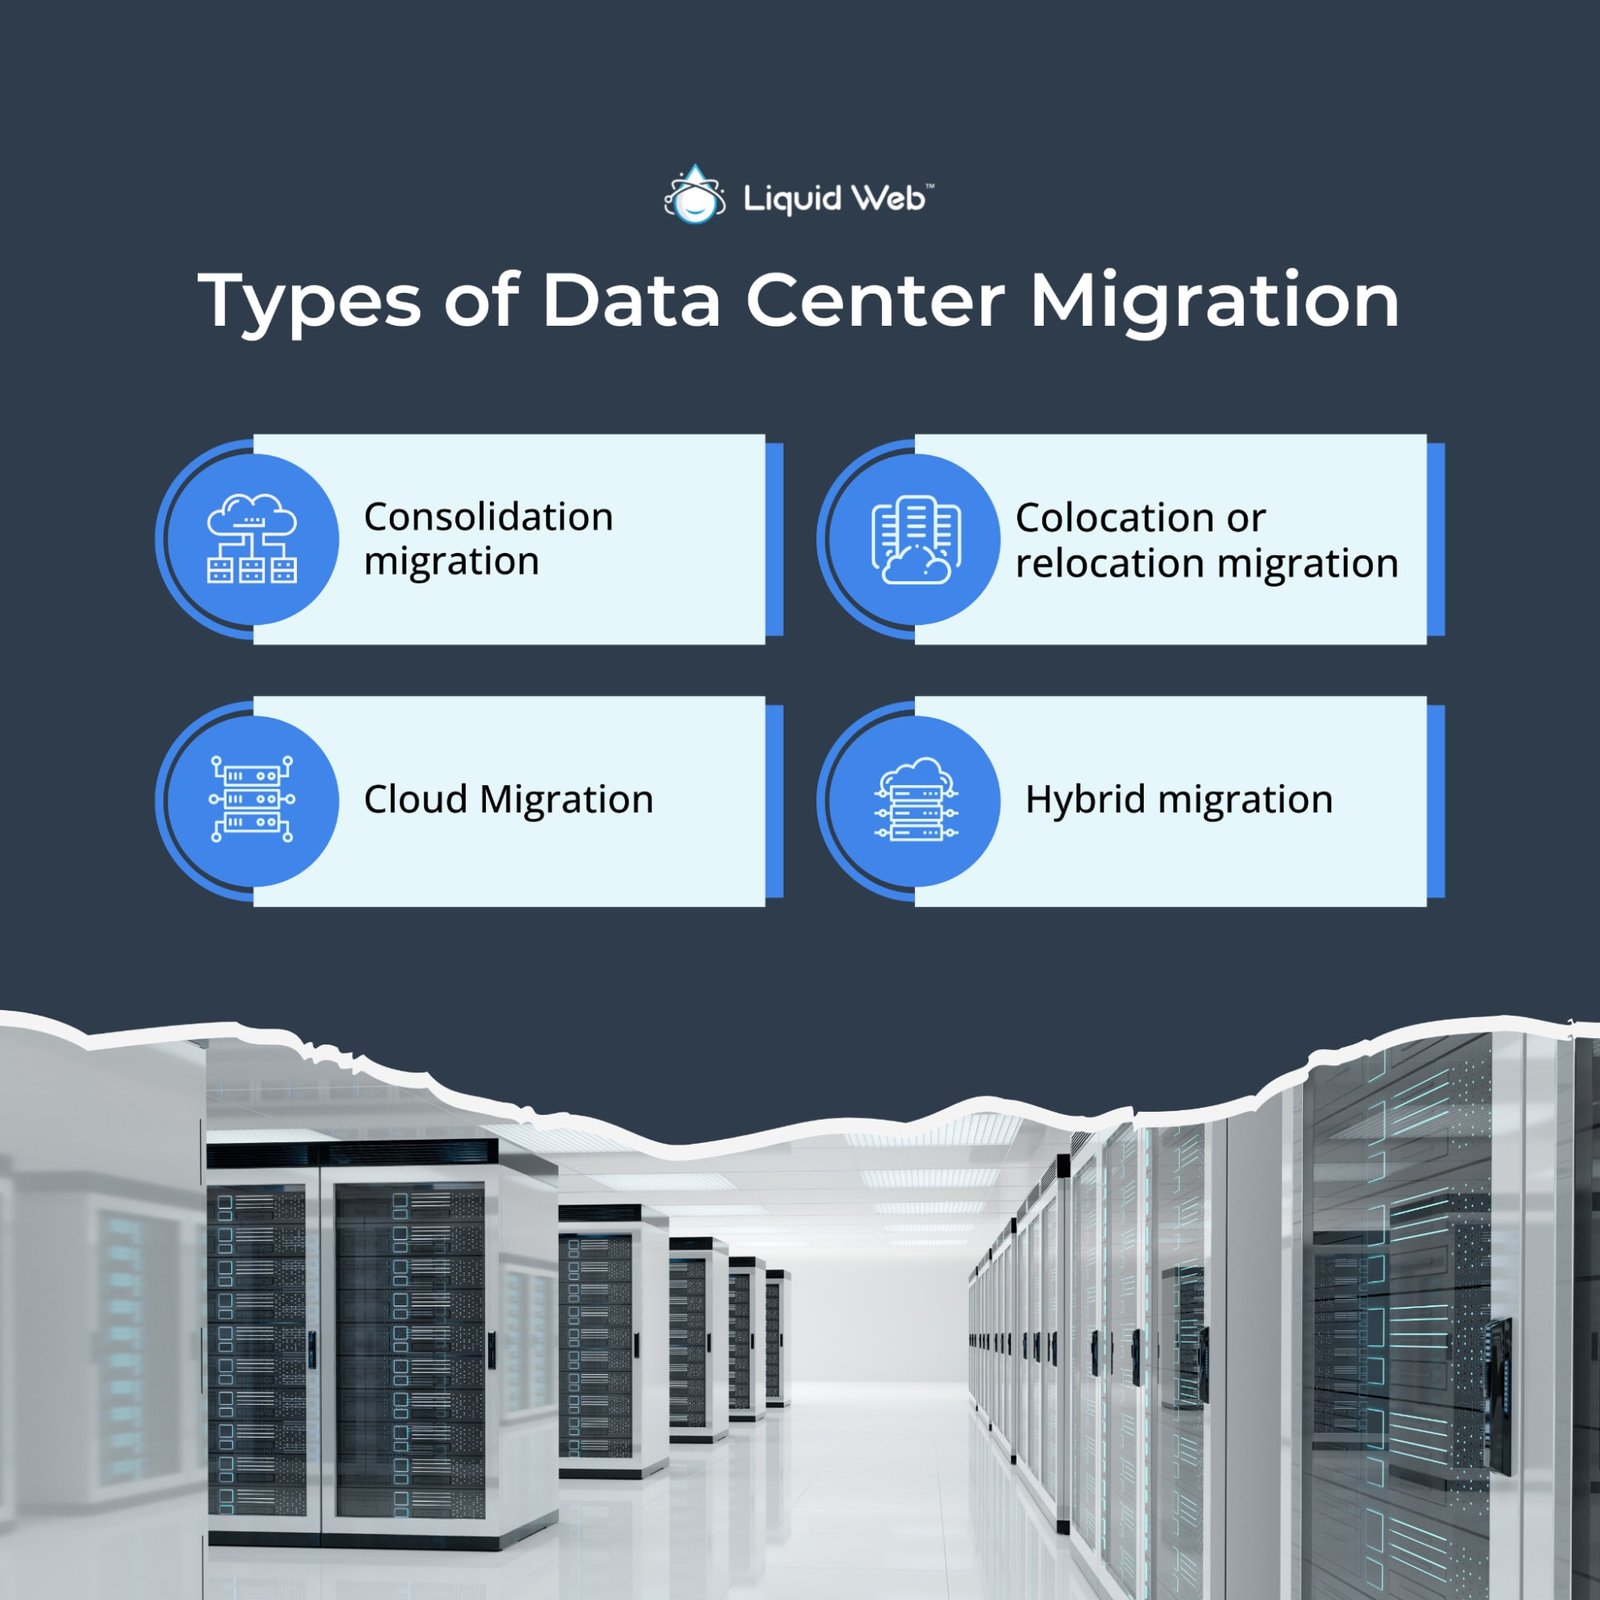 4 types of data center migration